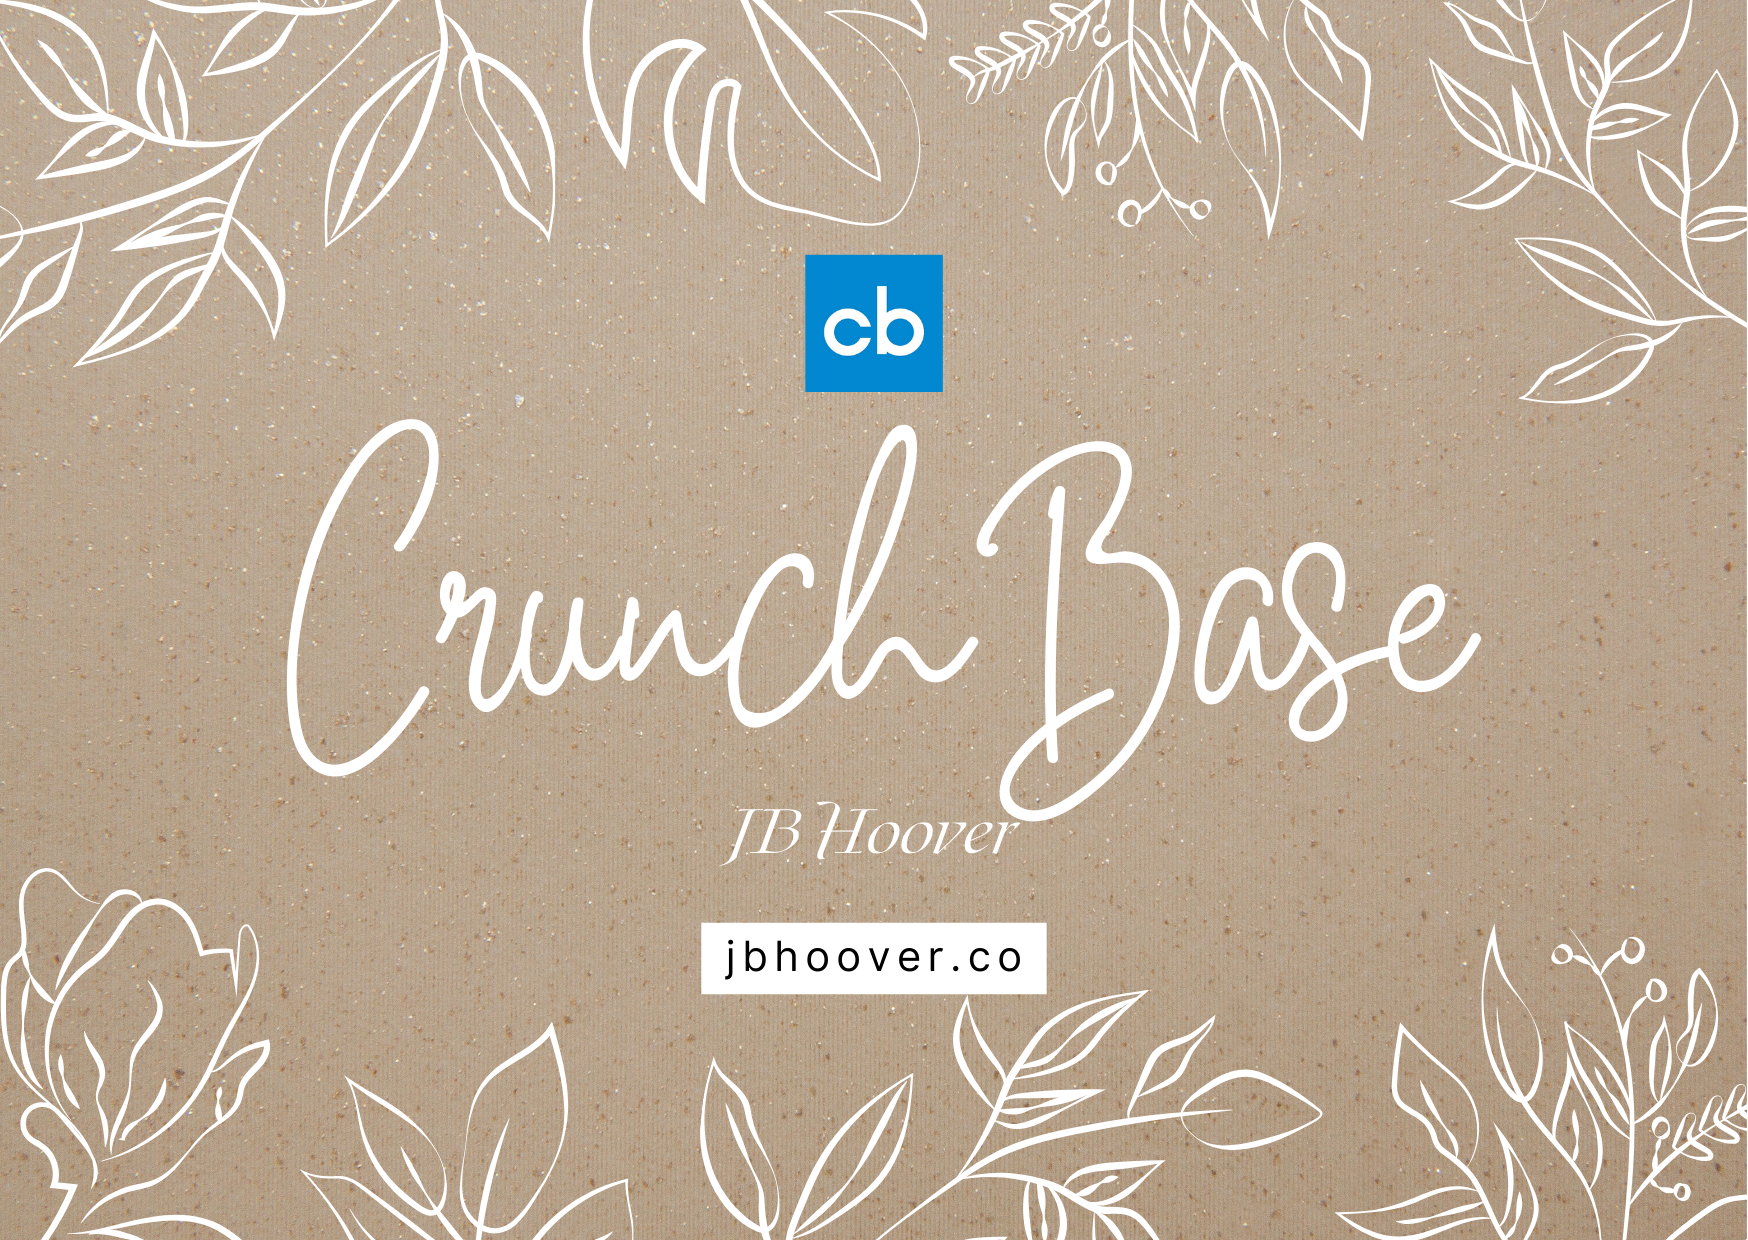 JB Hoover Crunchbase